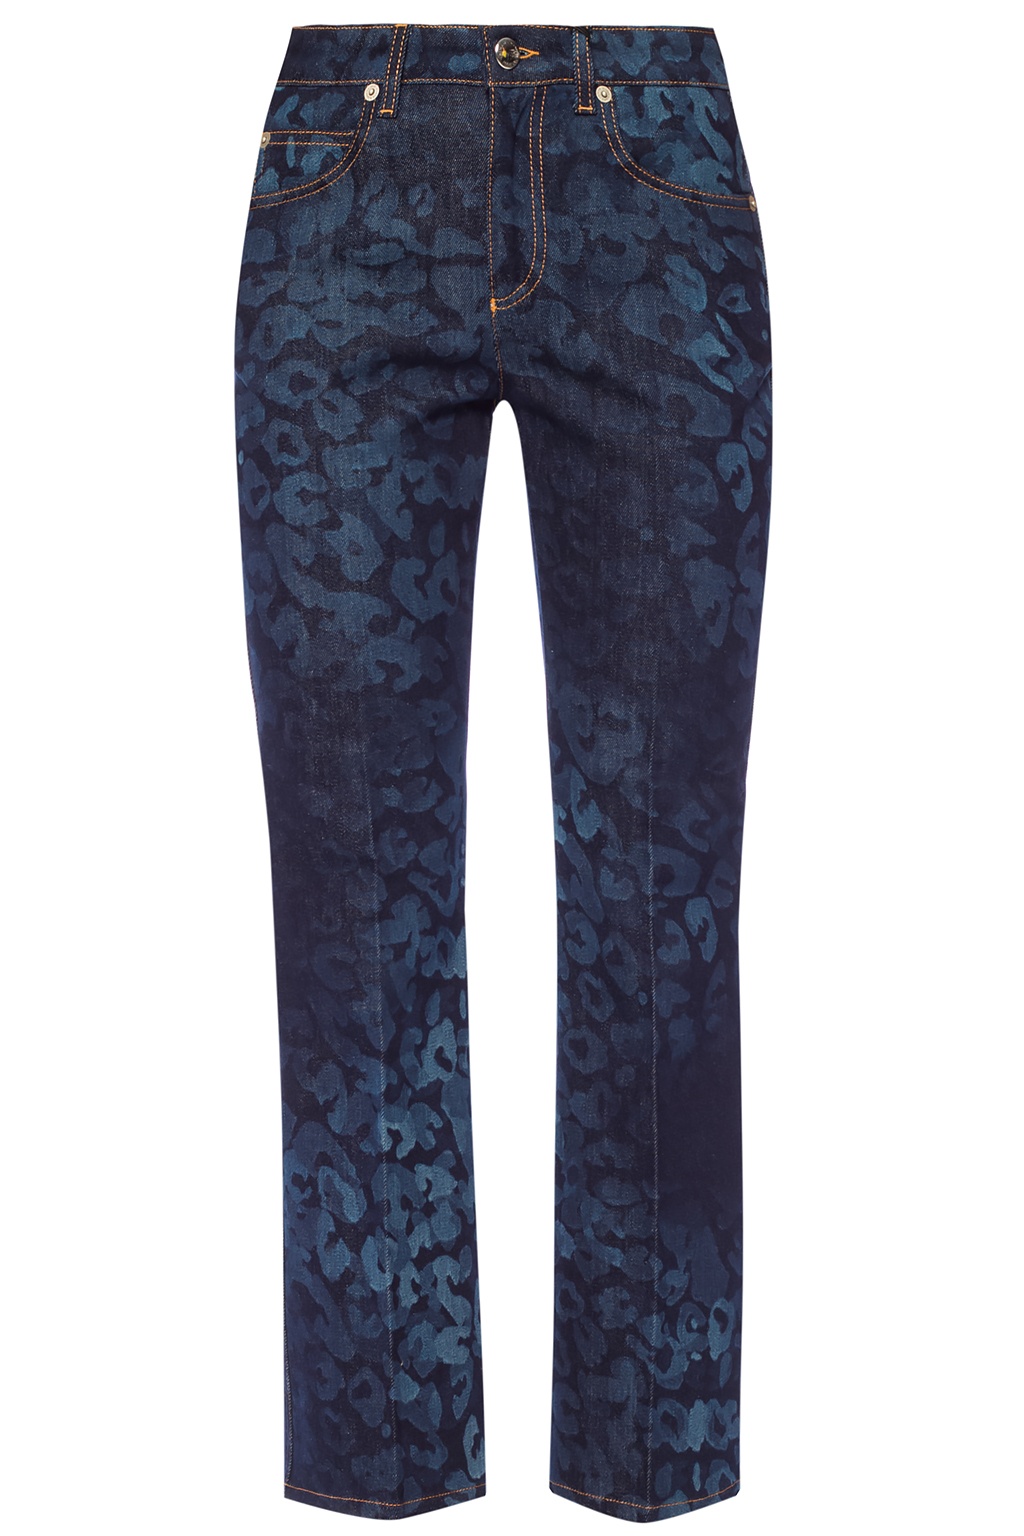 leopard print jeans australia